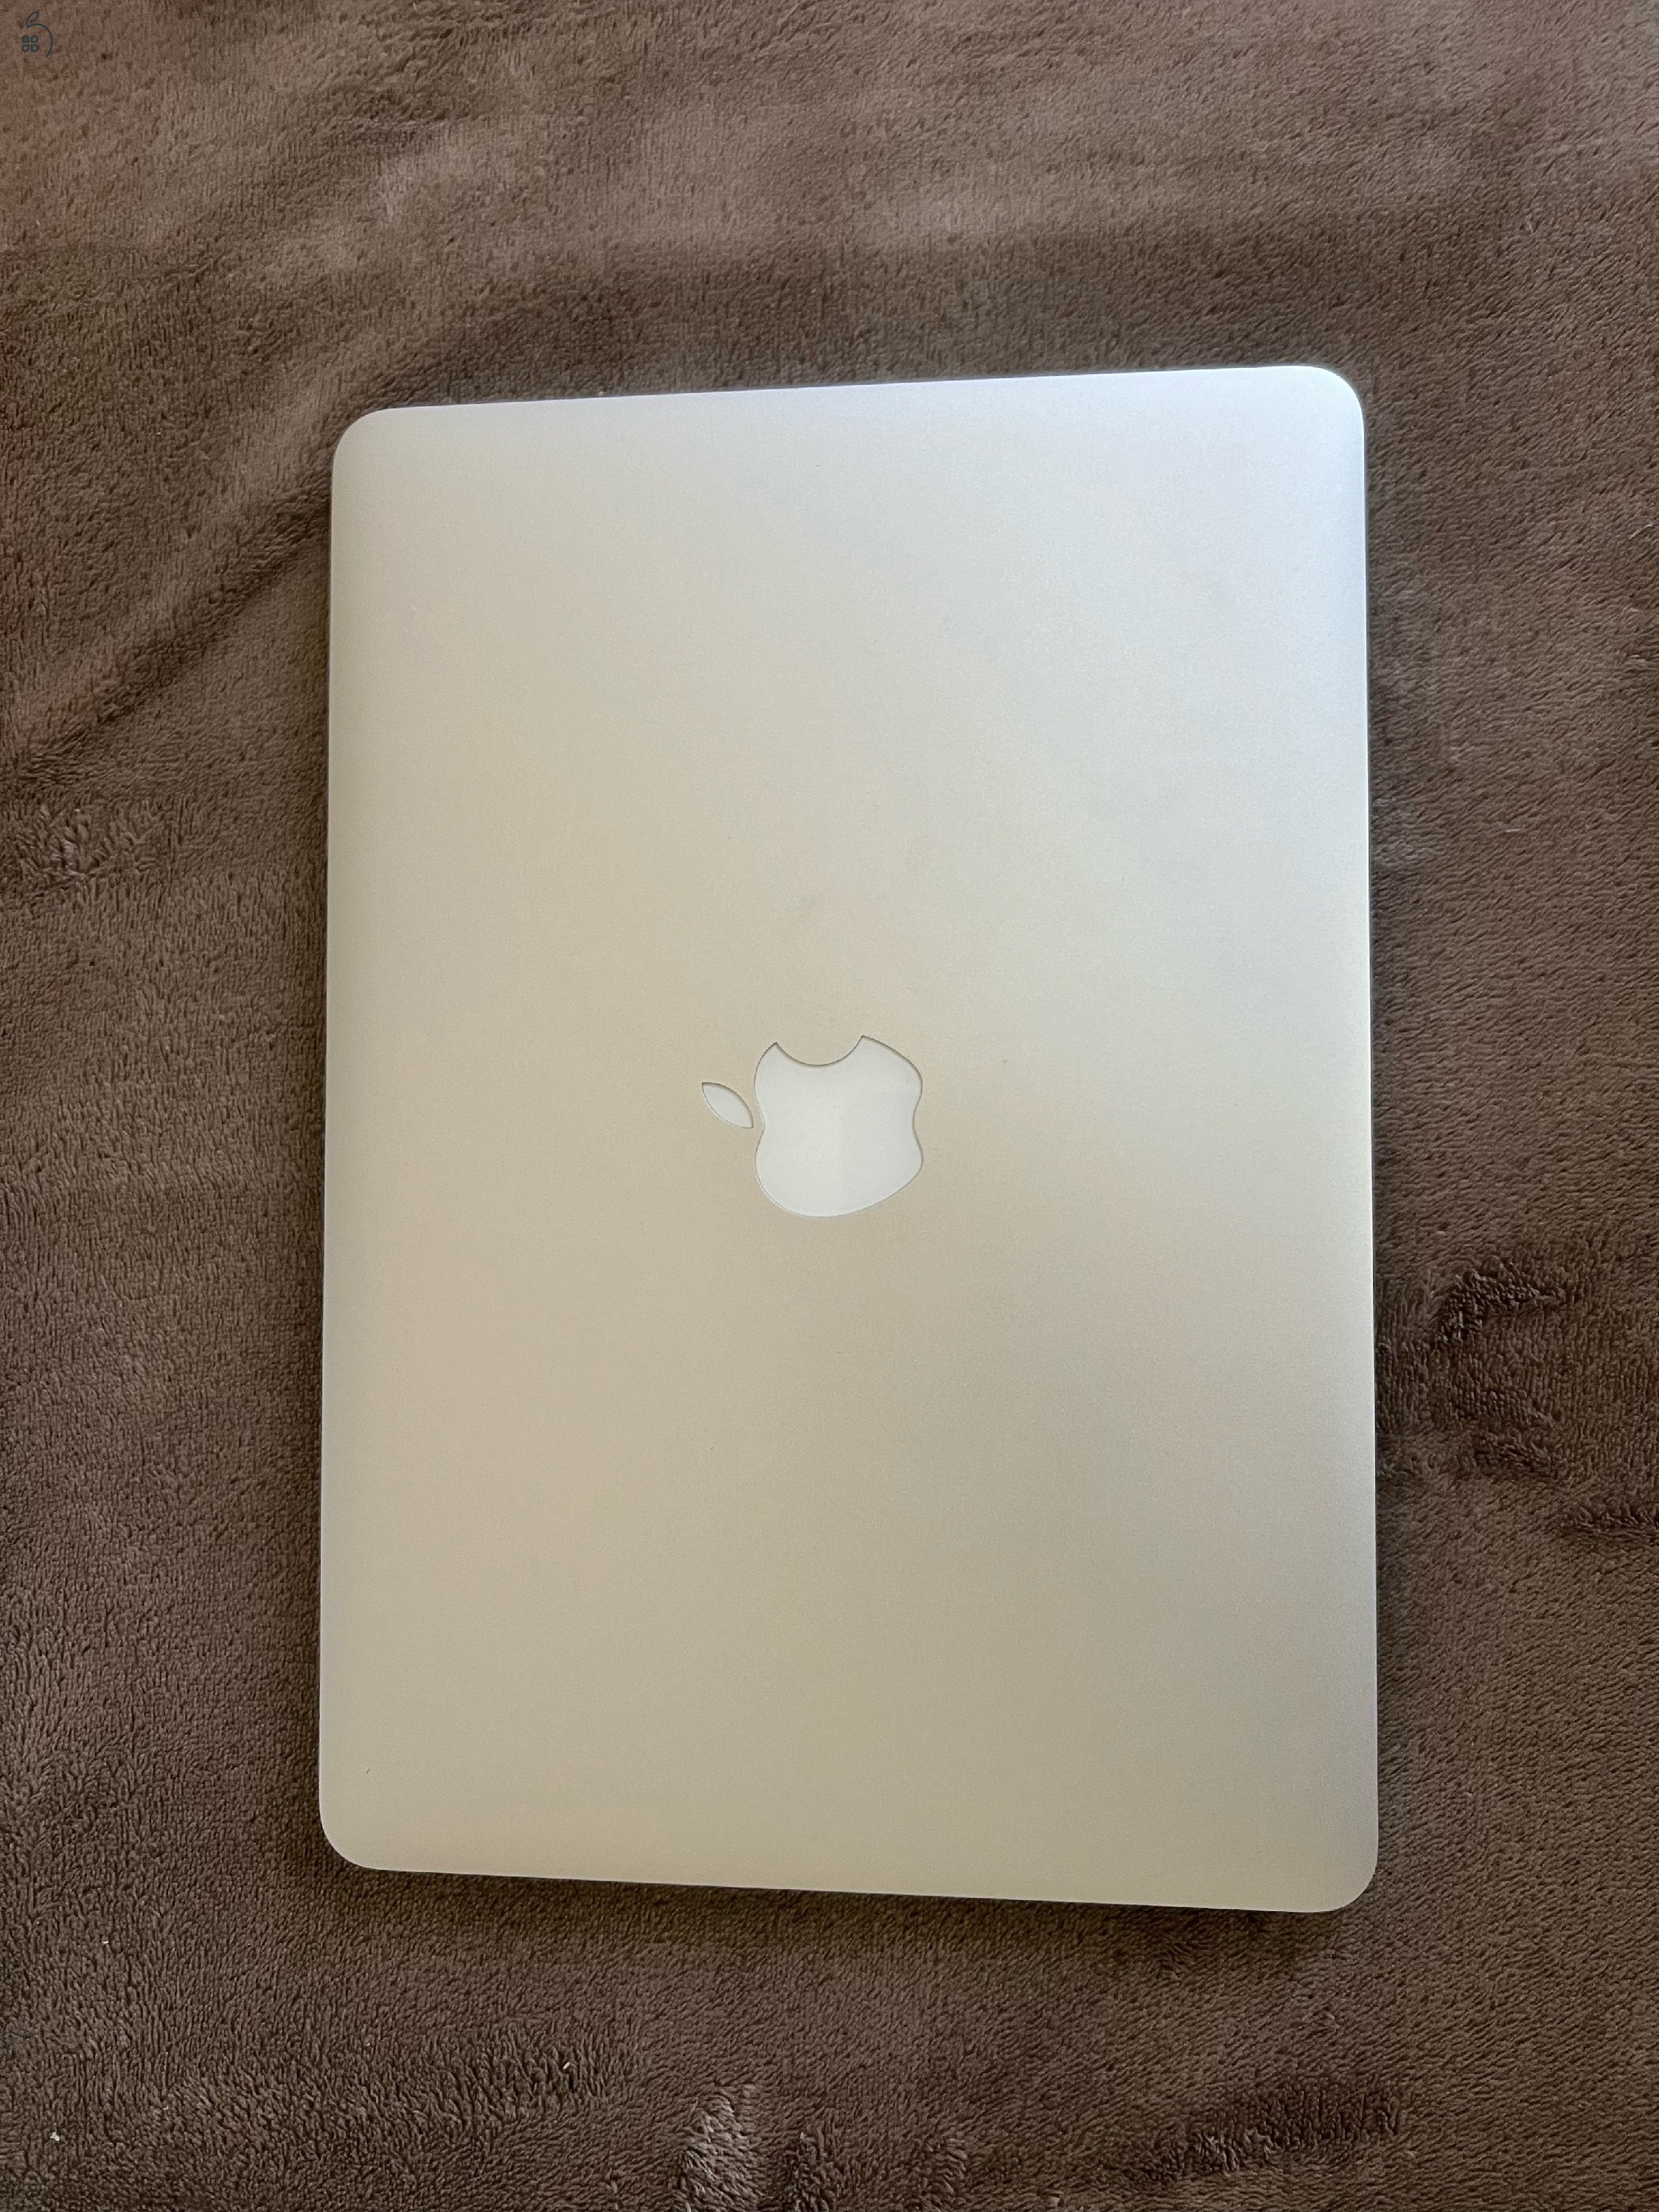 MacBook Pro (Retina, 13